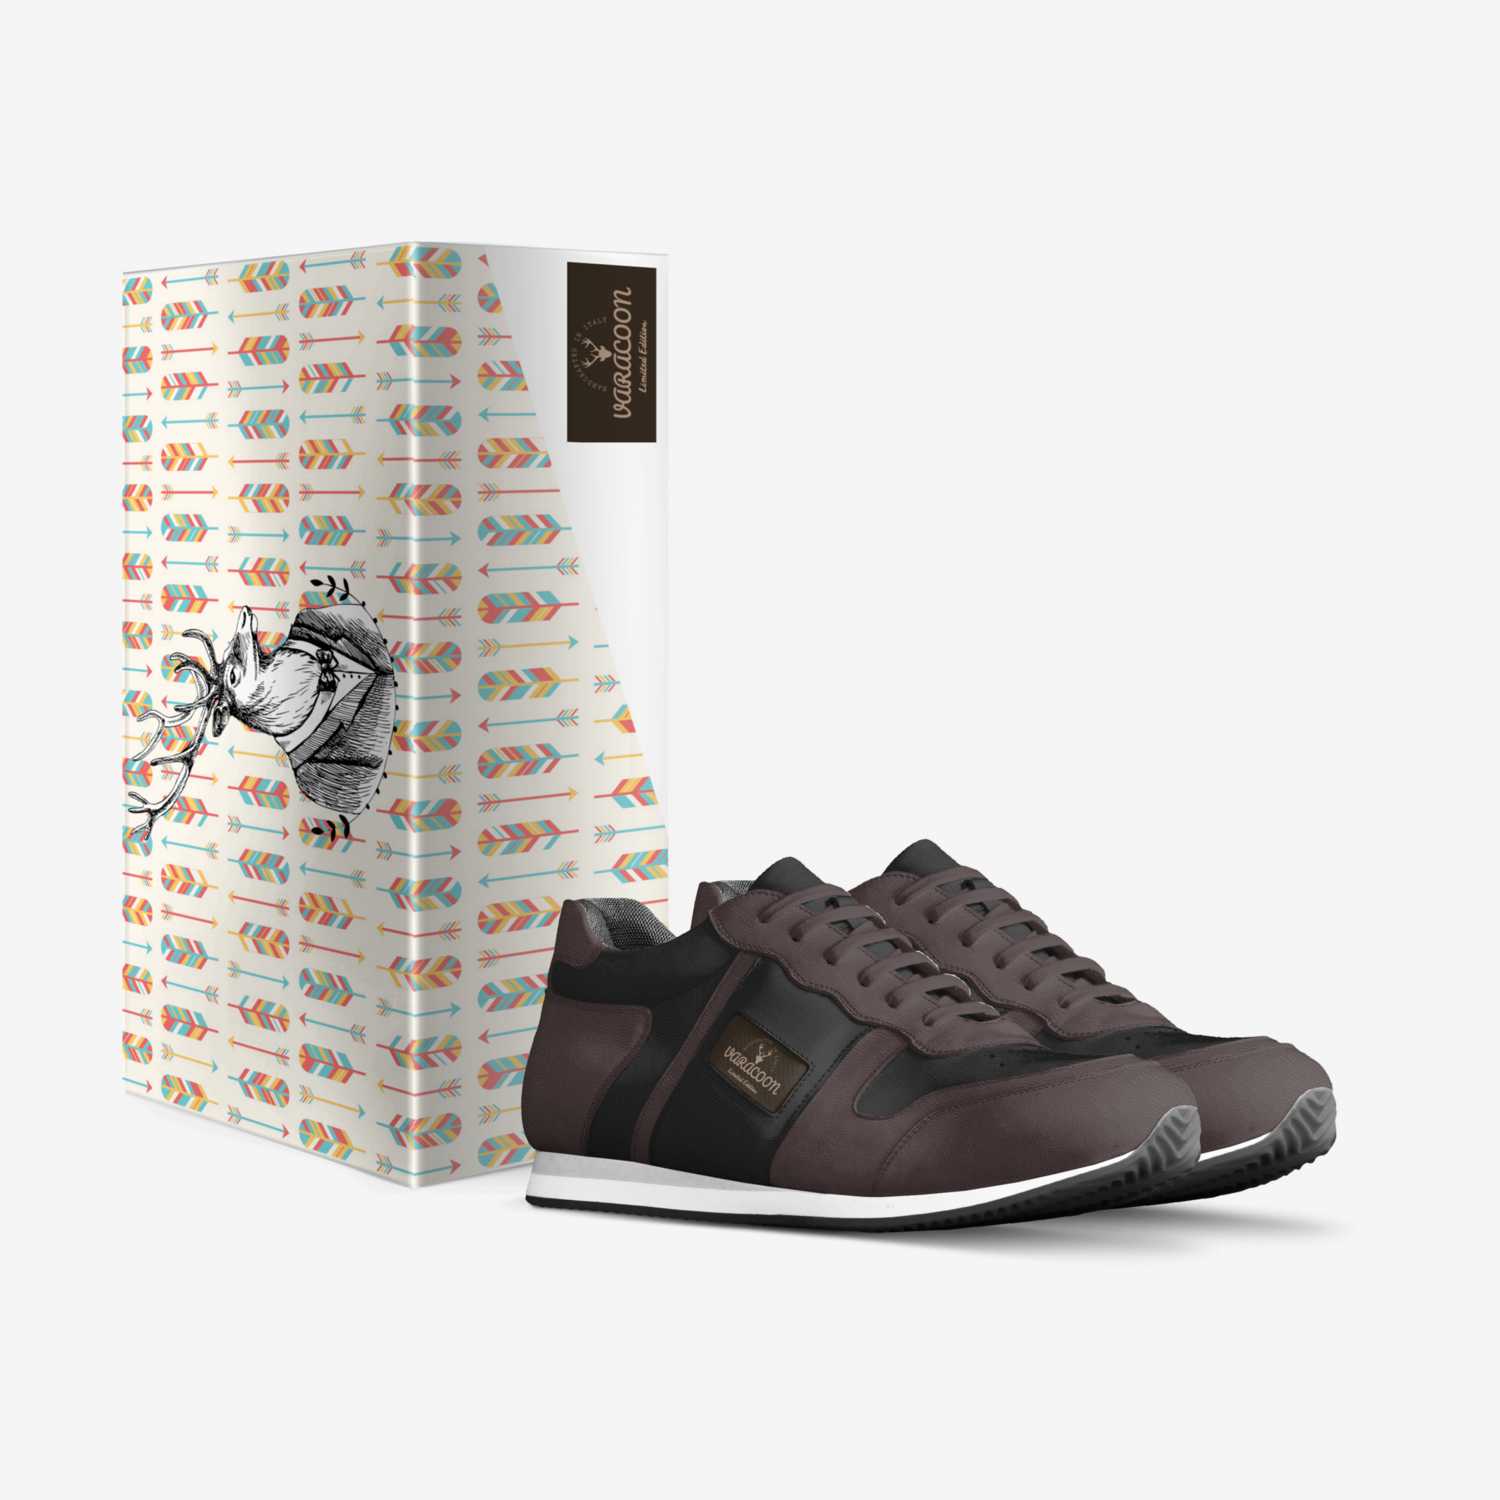 VARACOON custom made in Italy shoes by John Samano | Box view